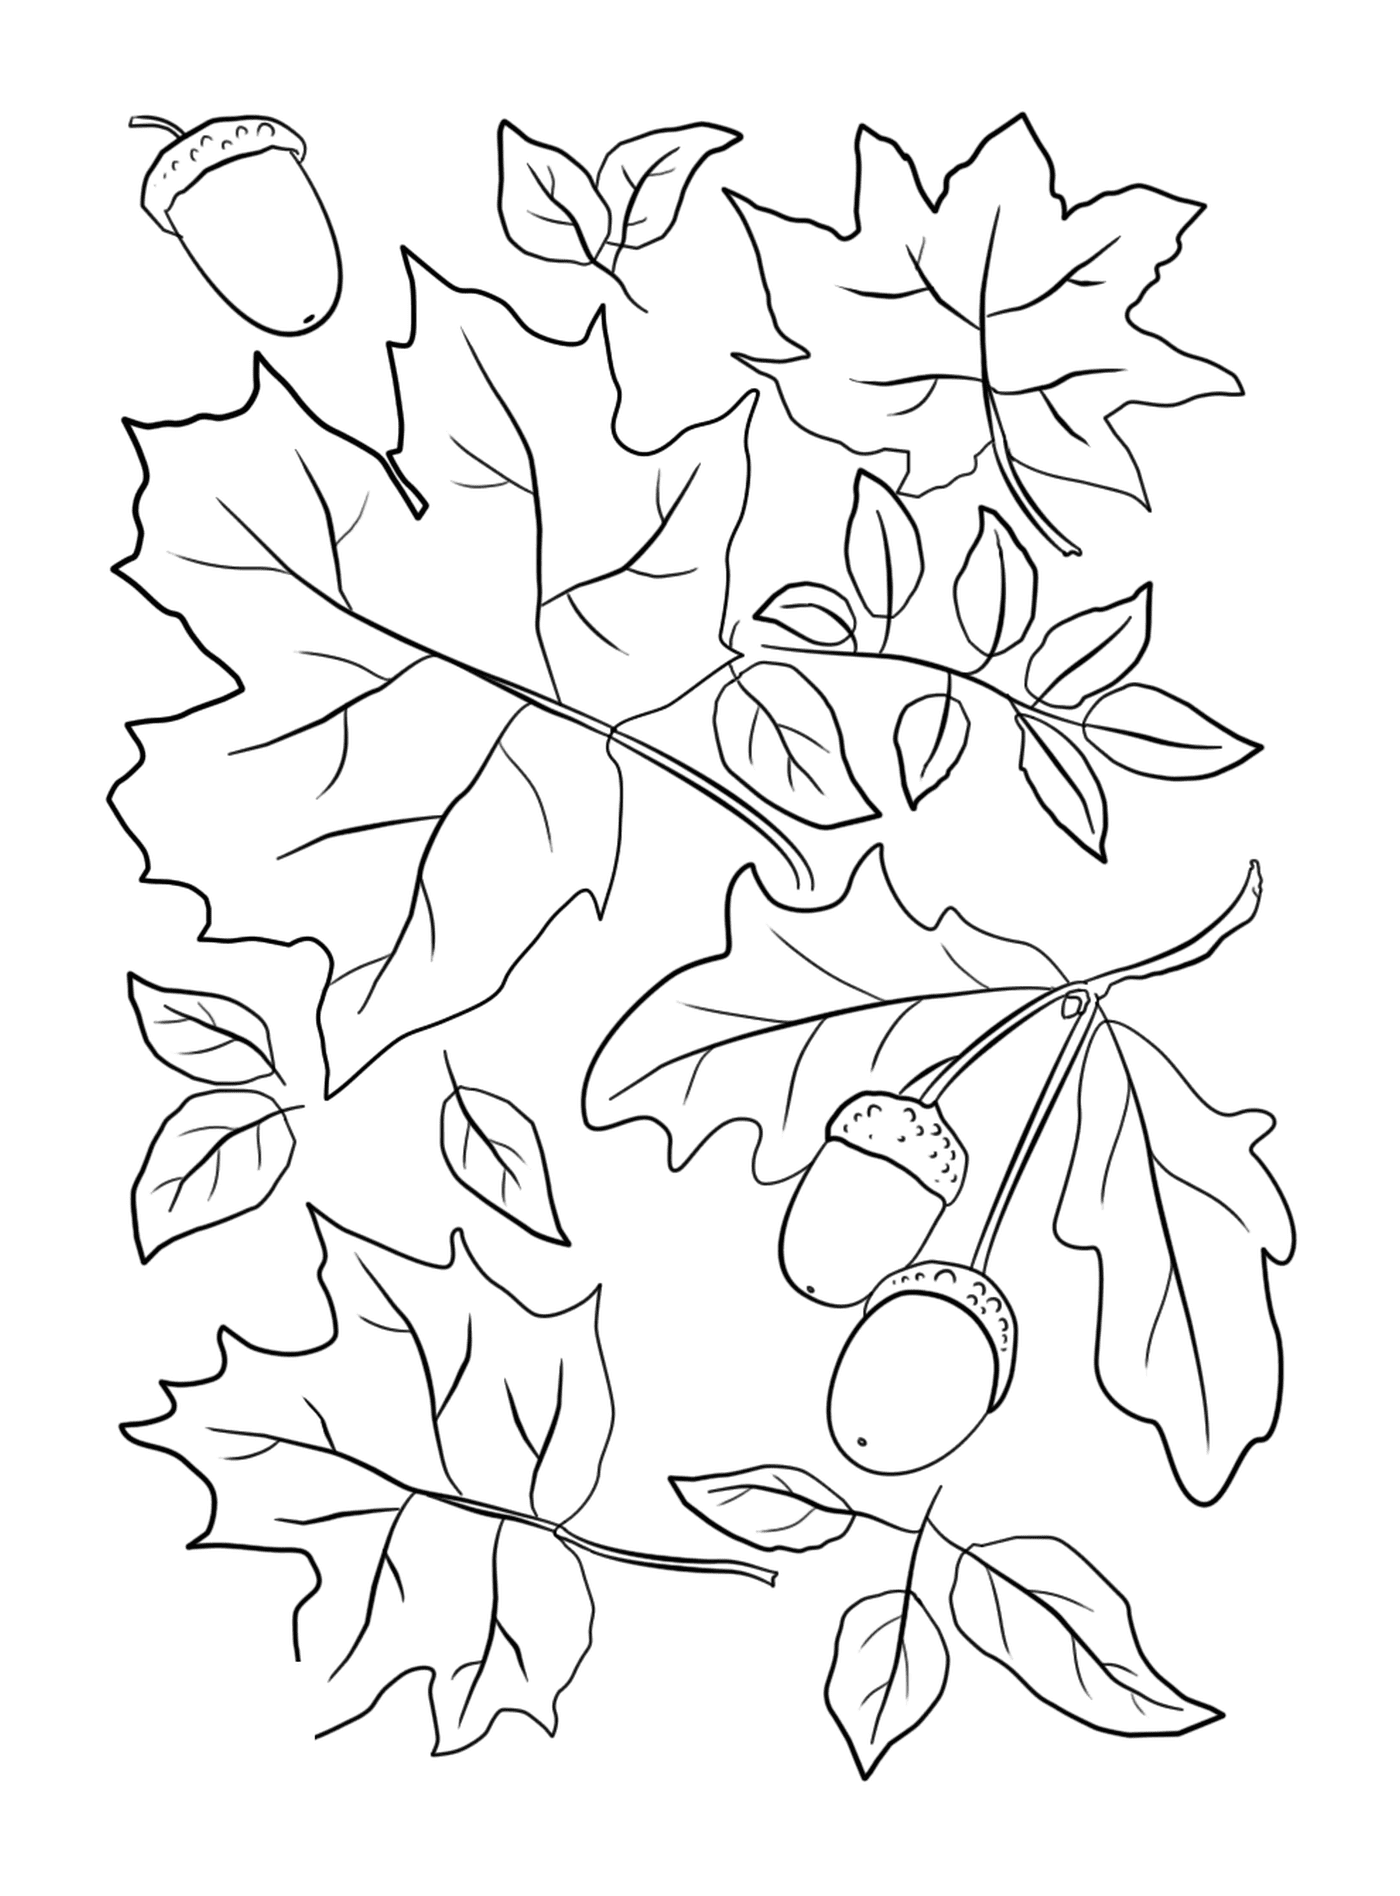  Листья и желудки на дереве 